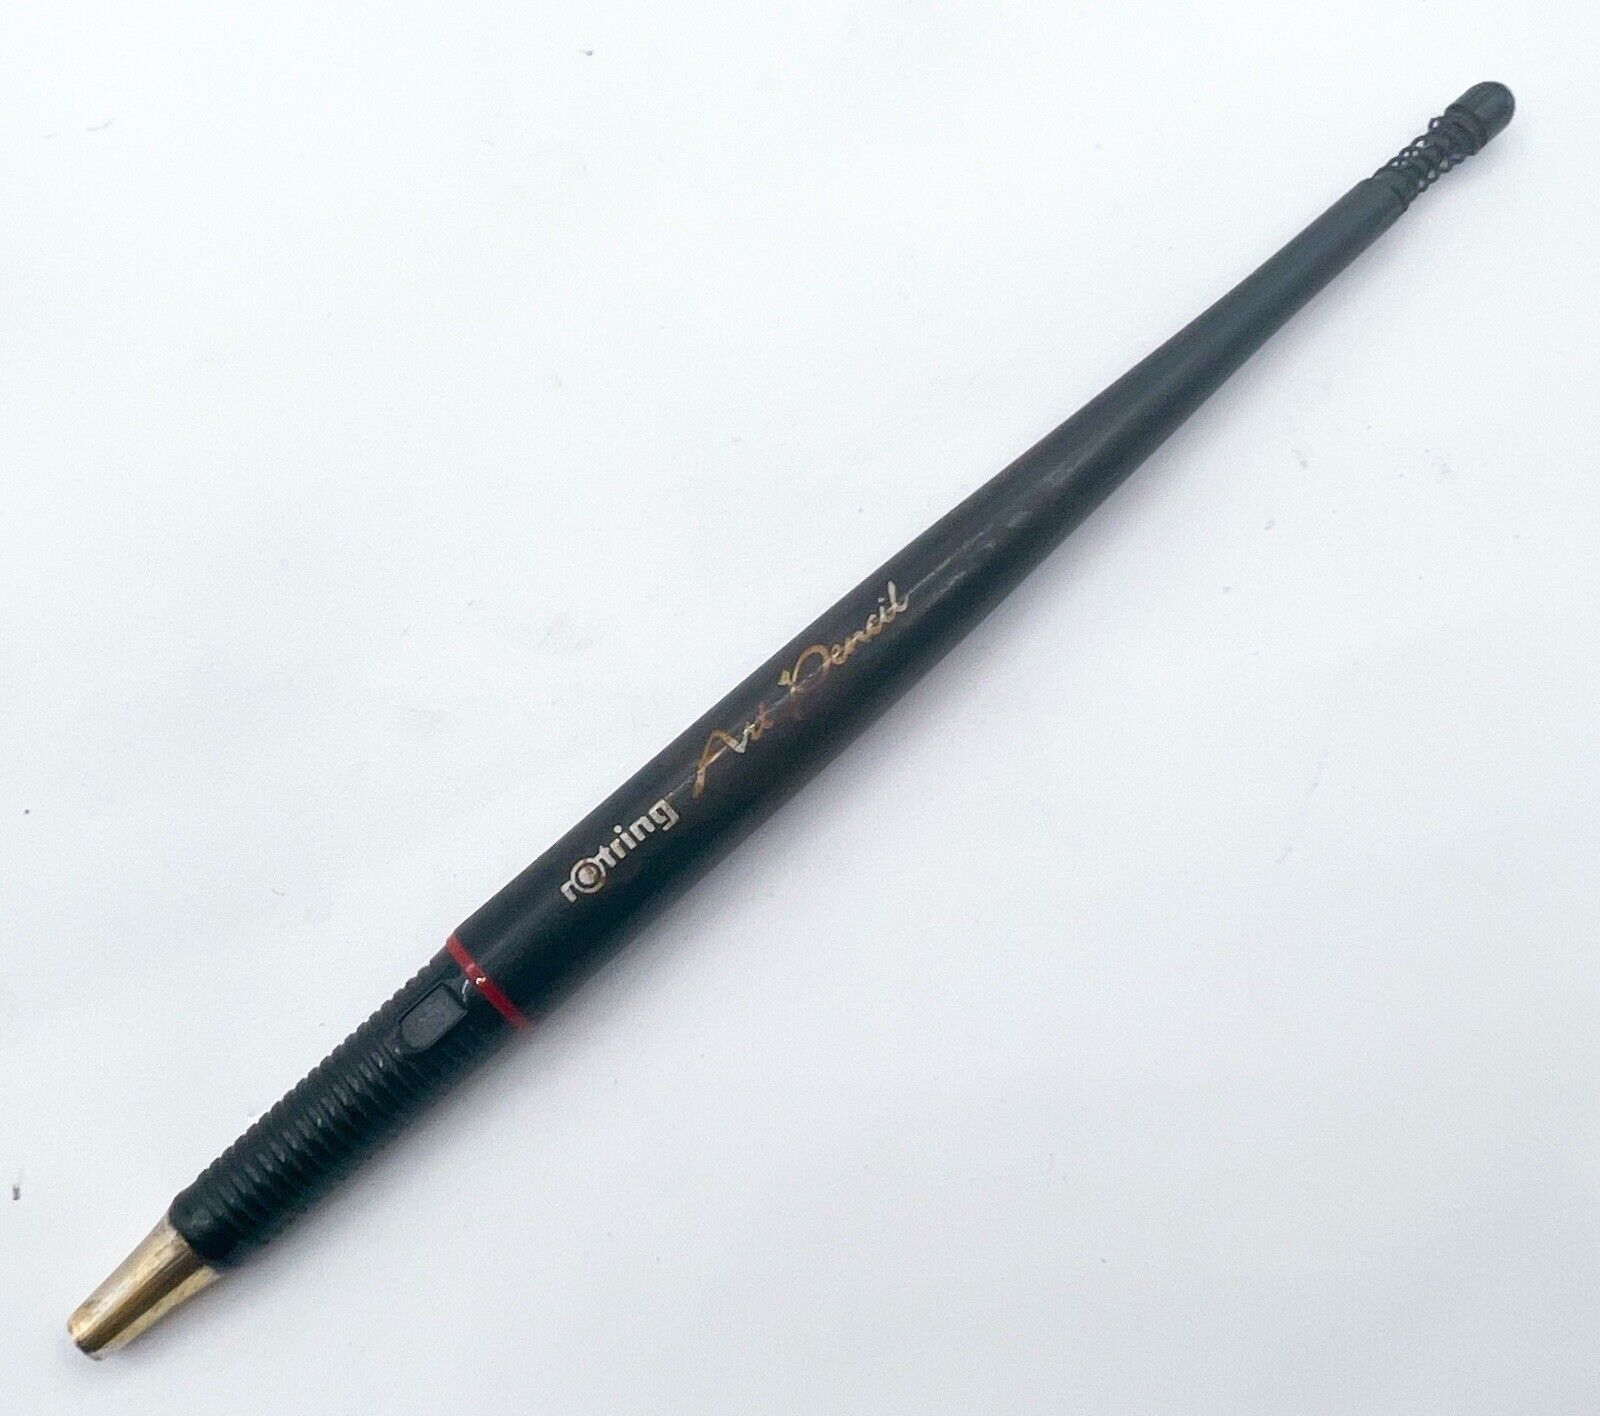 Rare rOtring Art Pencil 2mm Lead Holder Heavily Used 